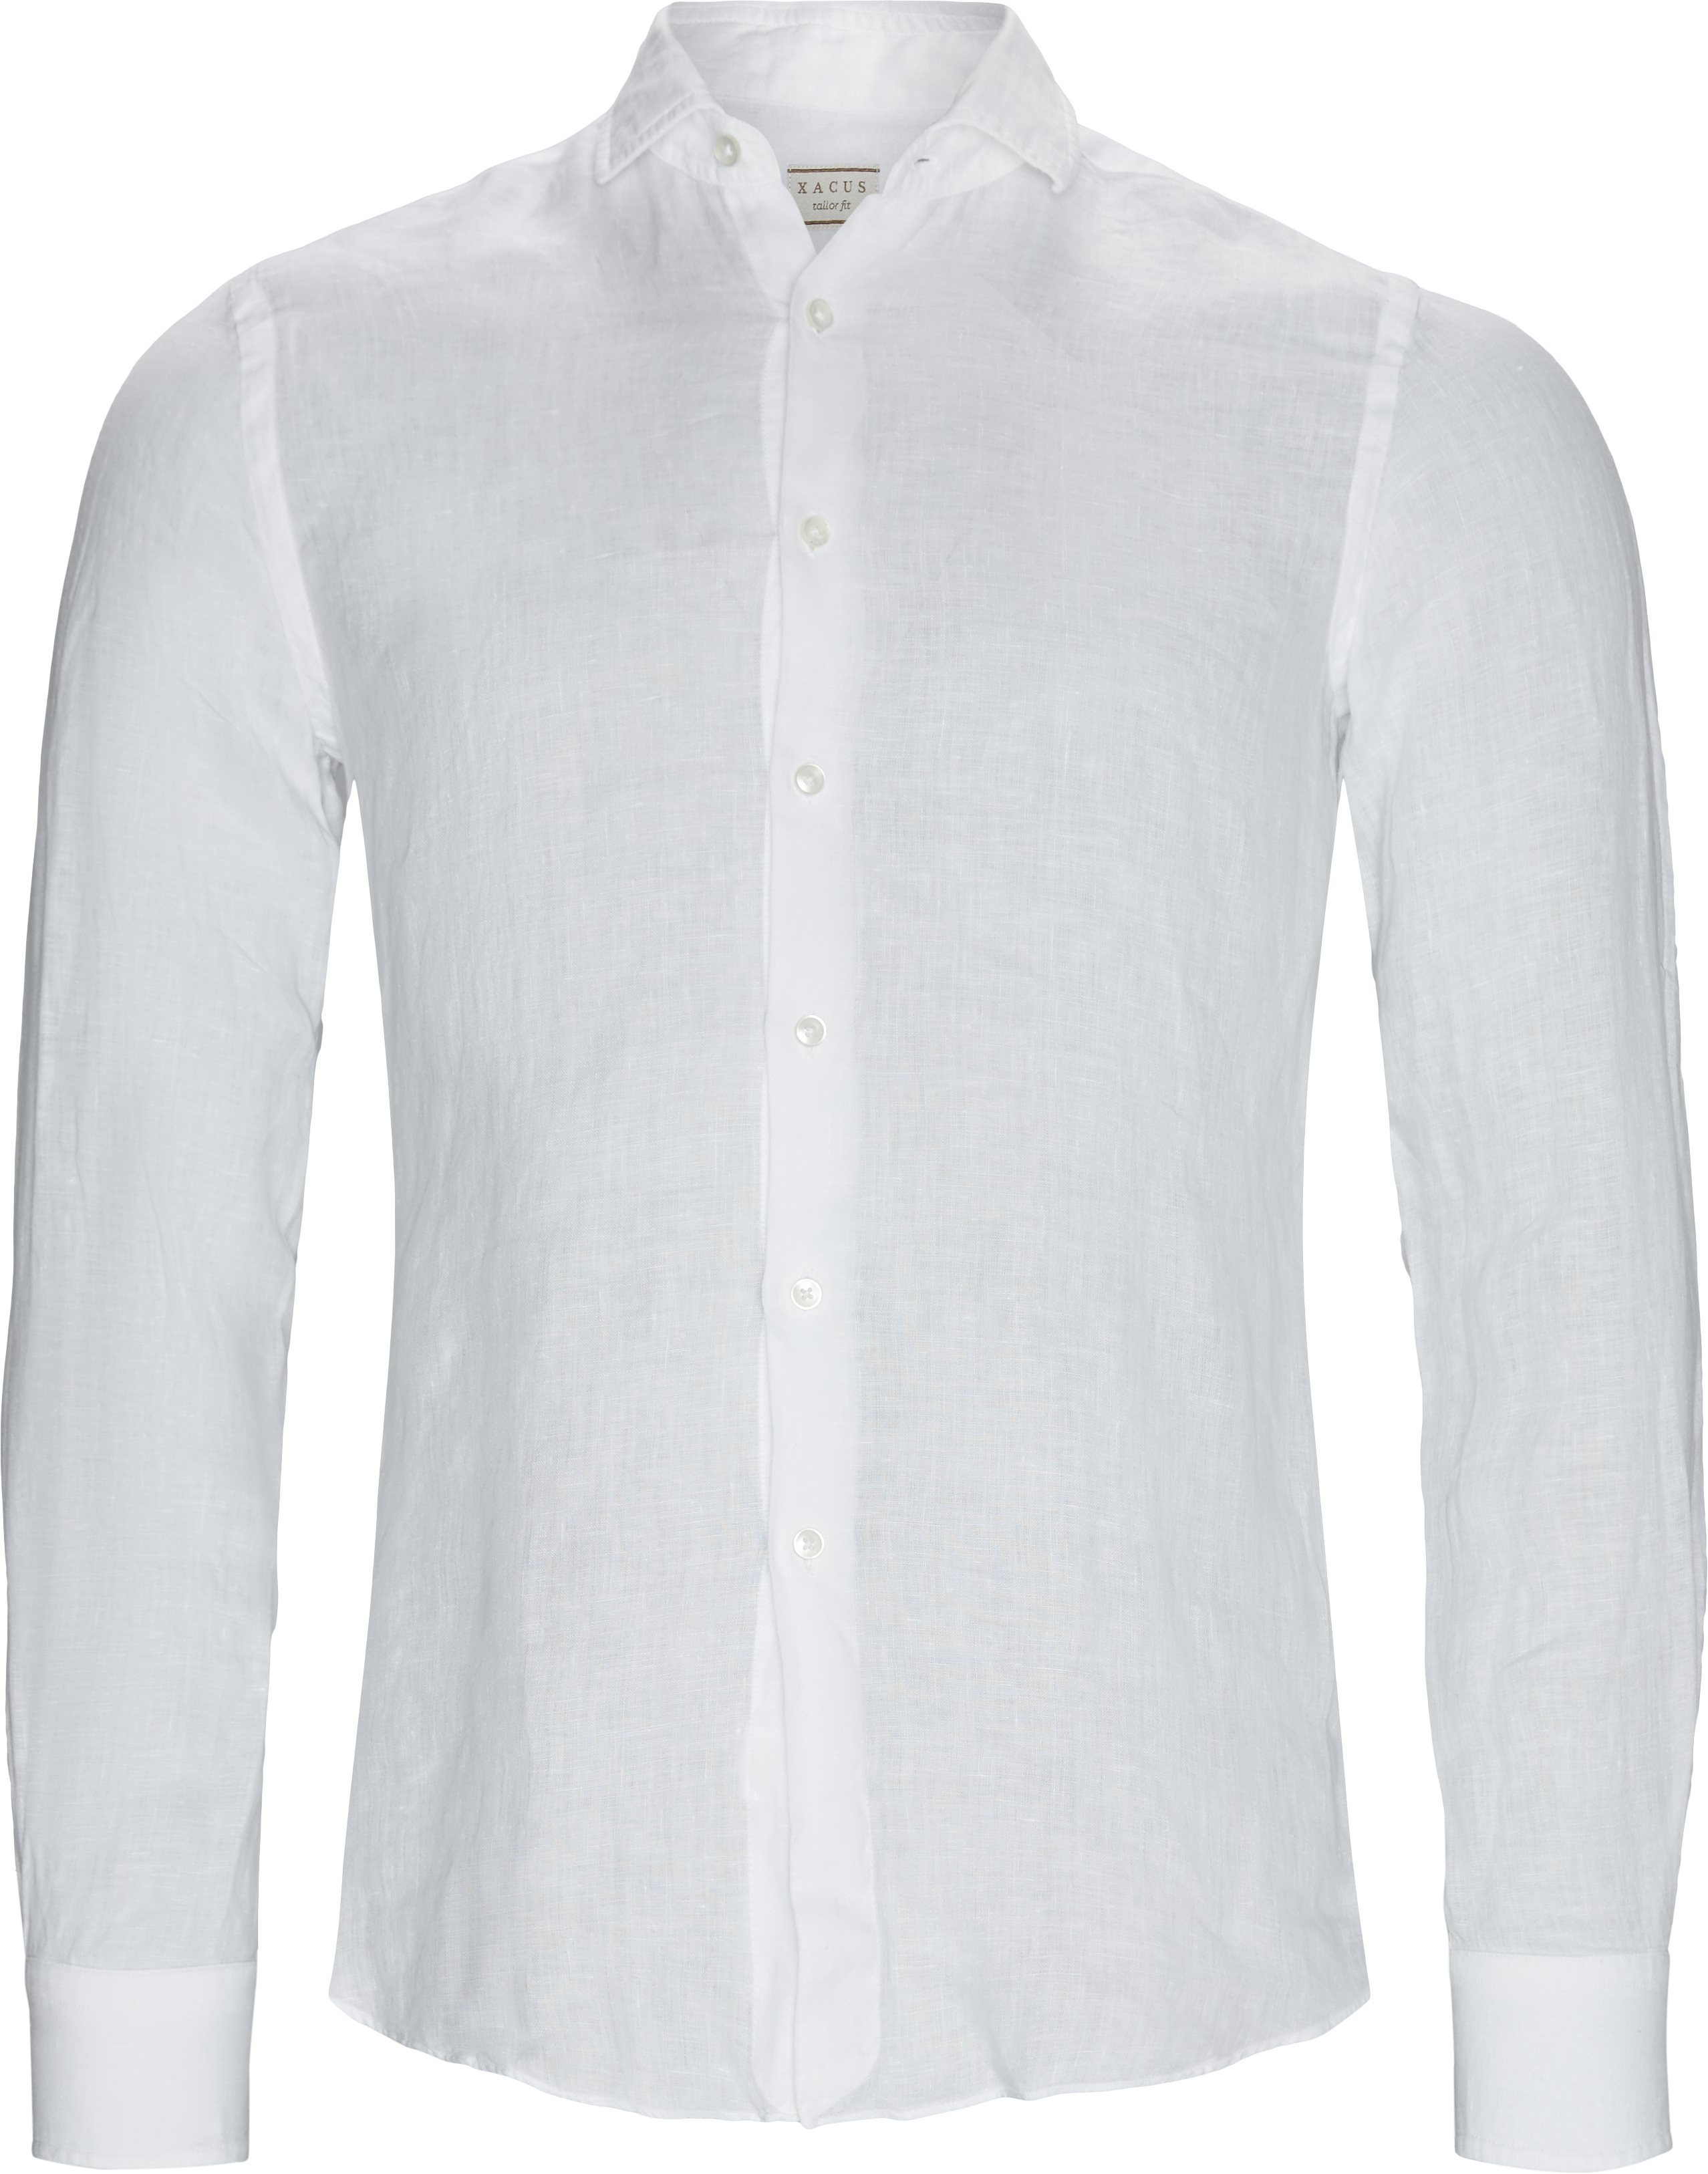 Skjorter - Tailored fit - Hvid